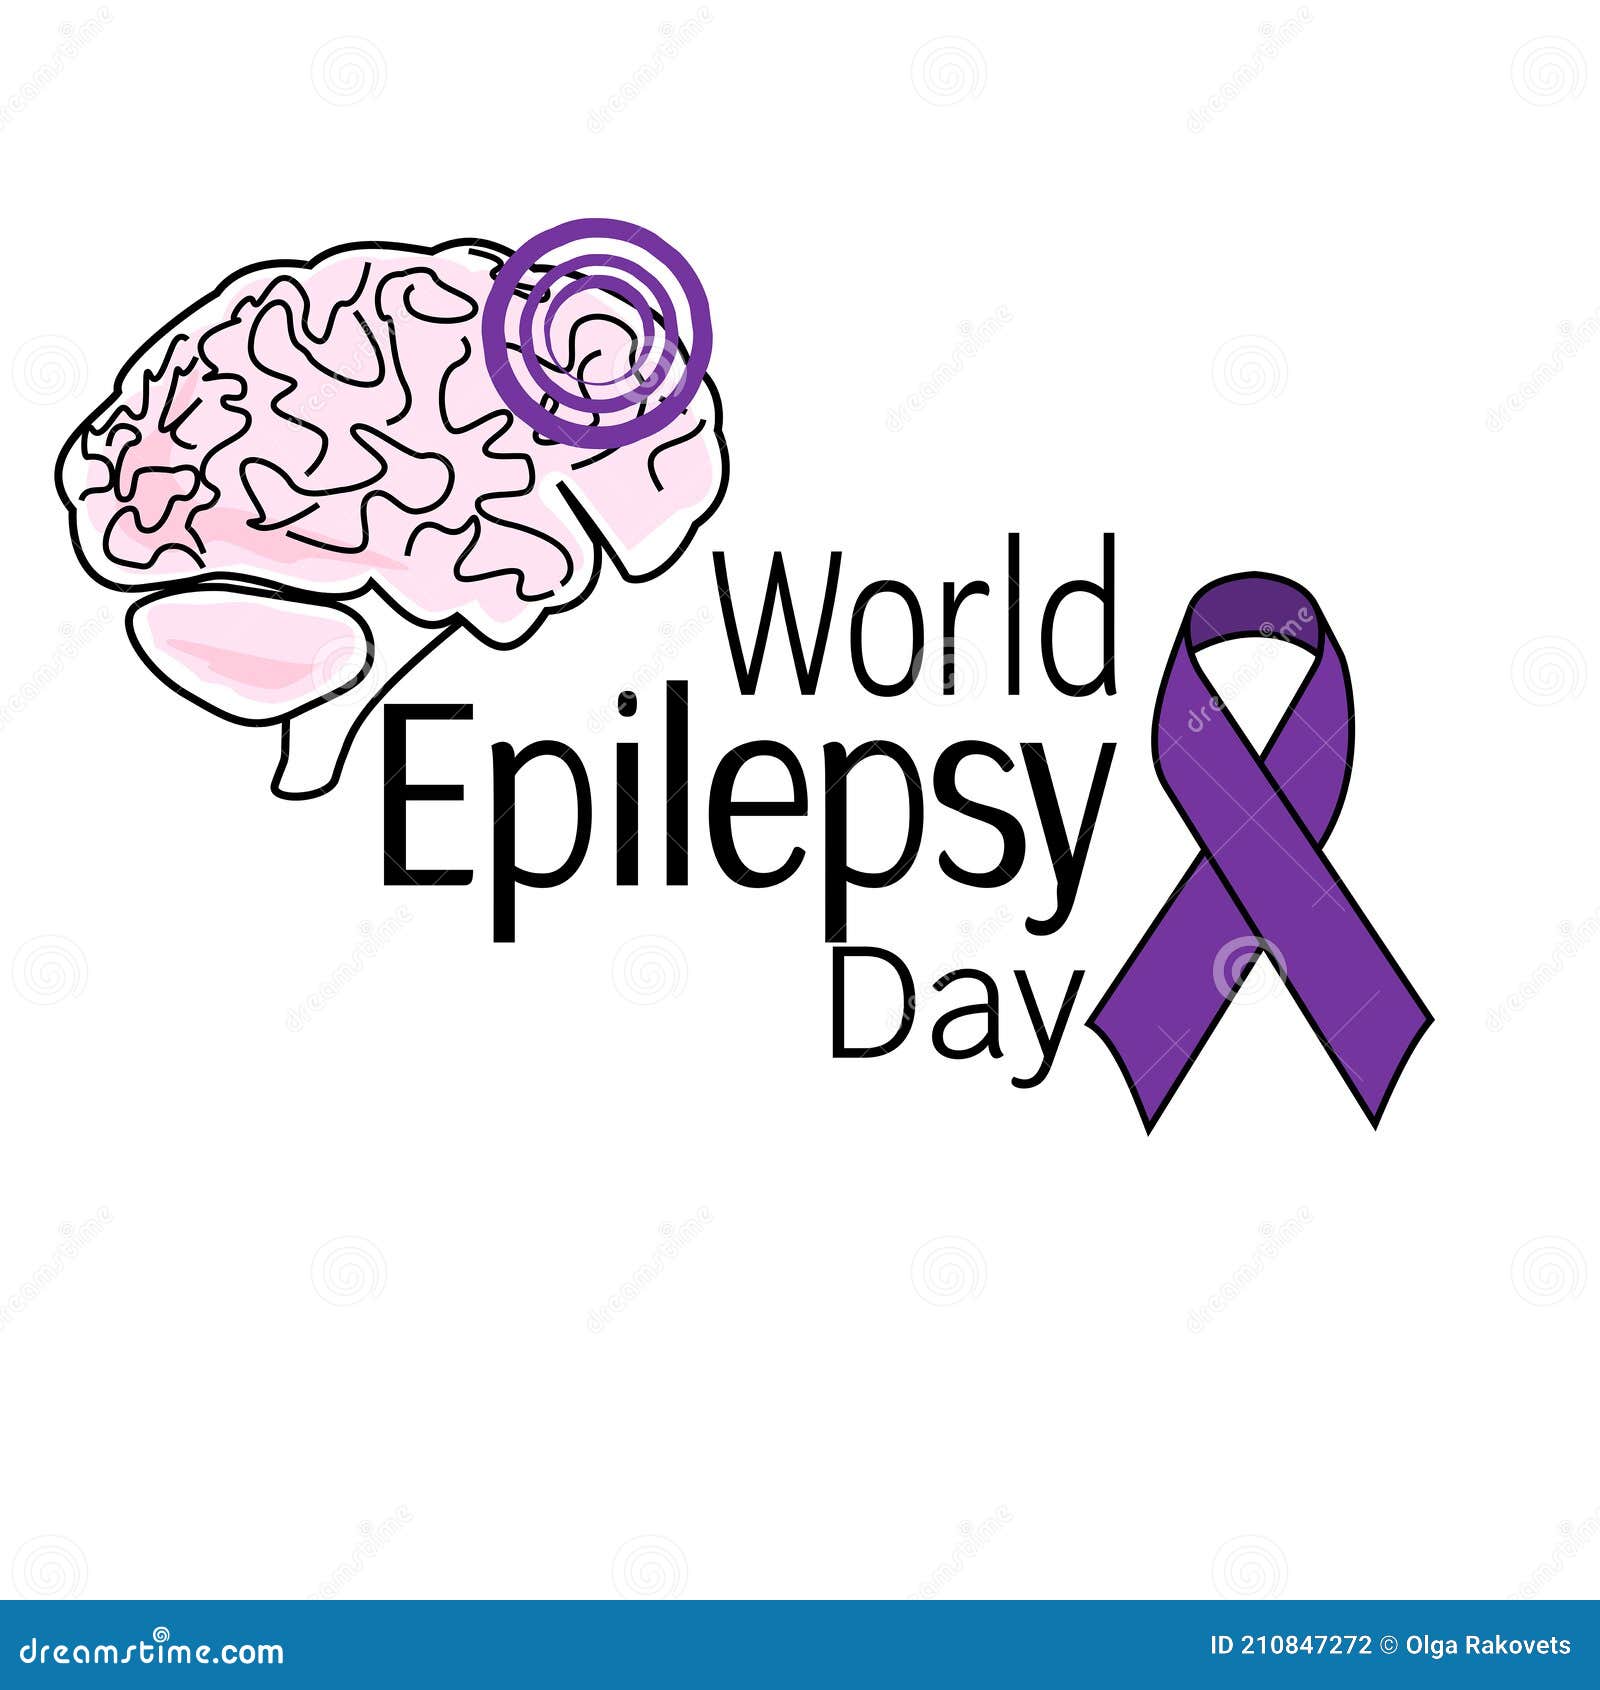 World Epilepsy Day, Symbolic Image of the Brain, Ribbons and Themed